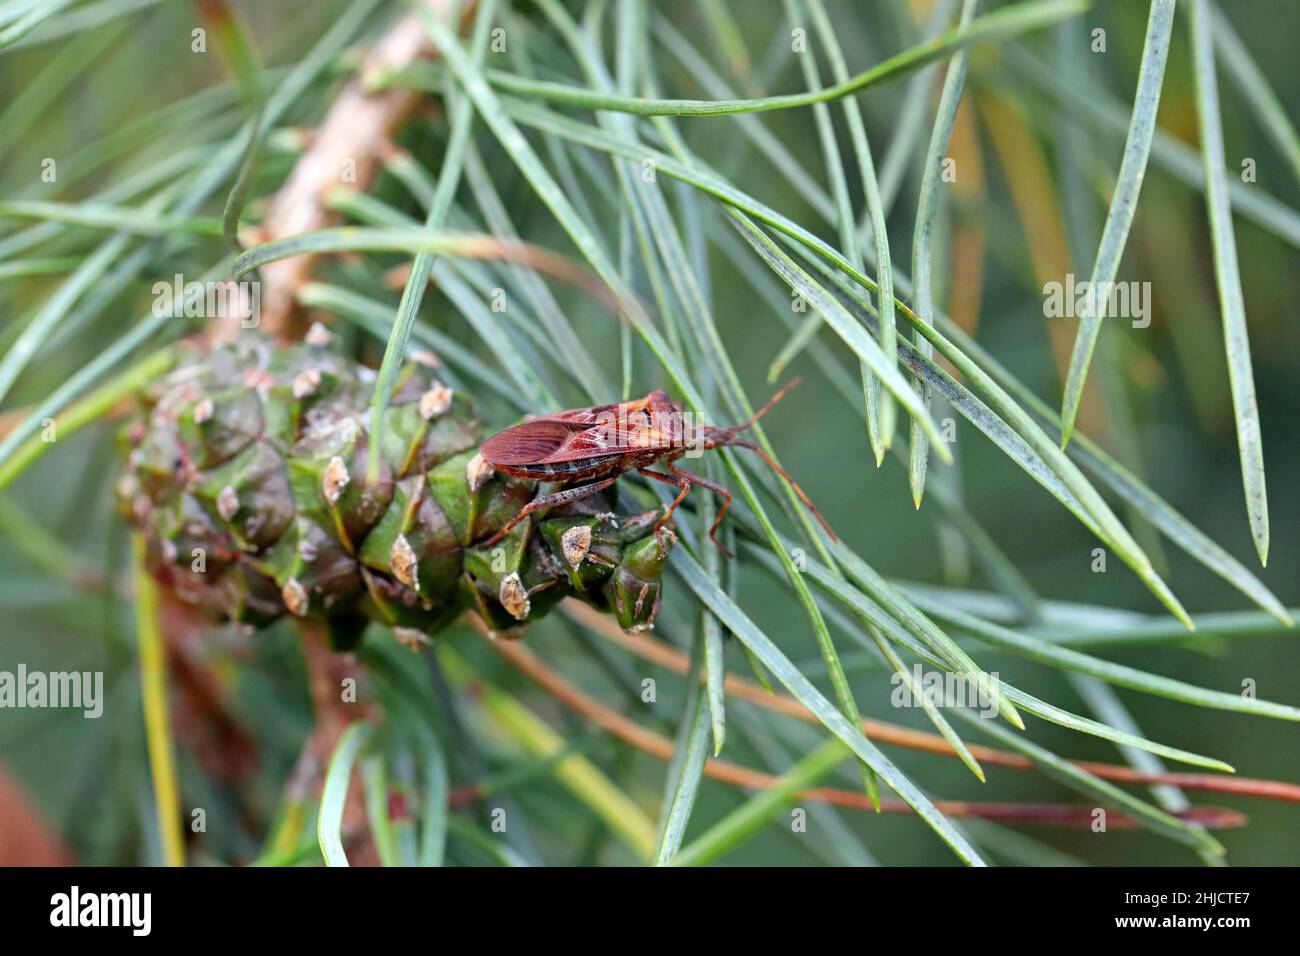 Western Conifer Seed Bug Coreoides Leatherbugs, Coreidae Leaf-Footed Bugs, Coreinae Anisoscelini Leptoglossus occidentalis Foto Stock